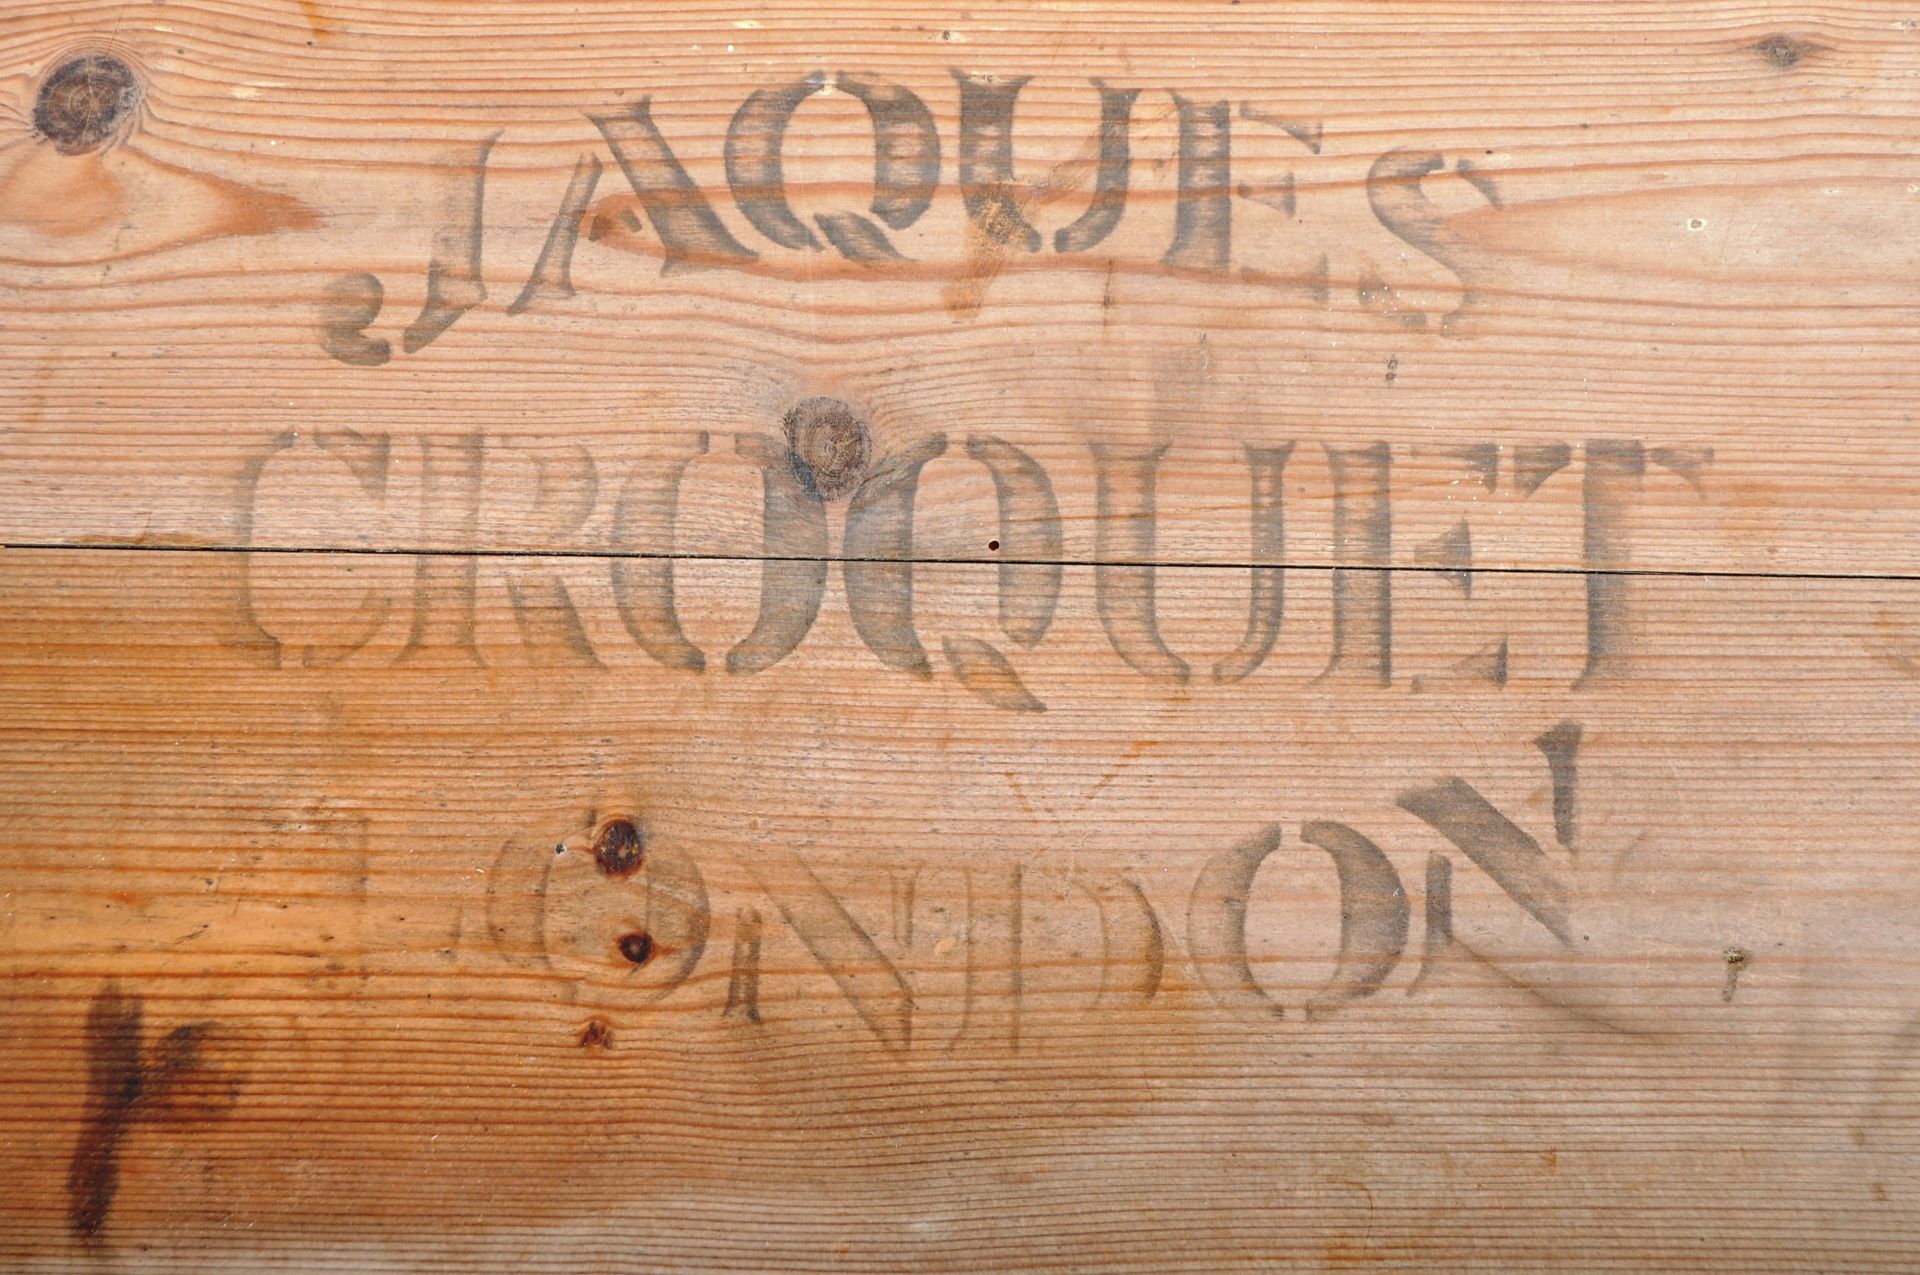 JAQUES OF LONDON - RETRO VINTAGE BOXED CROQUET SET - Image 6 of 6